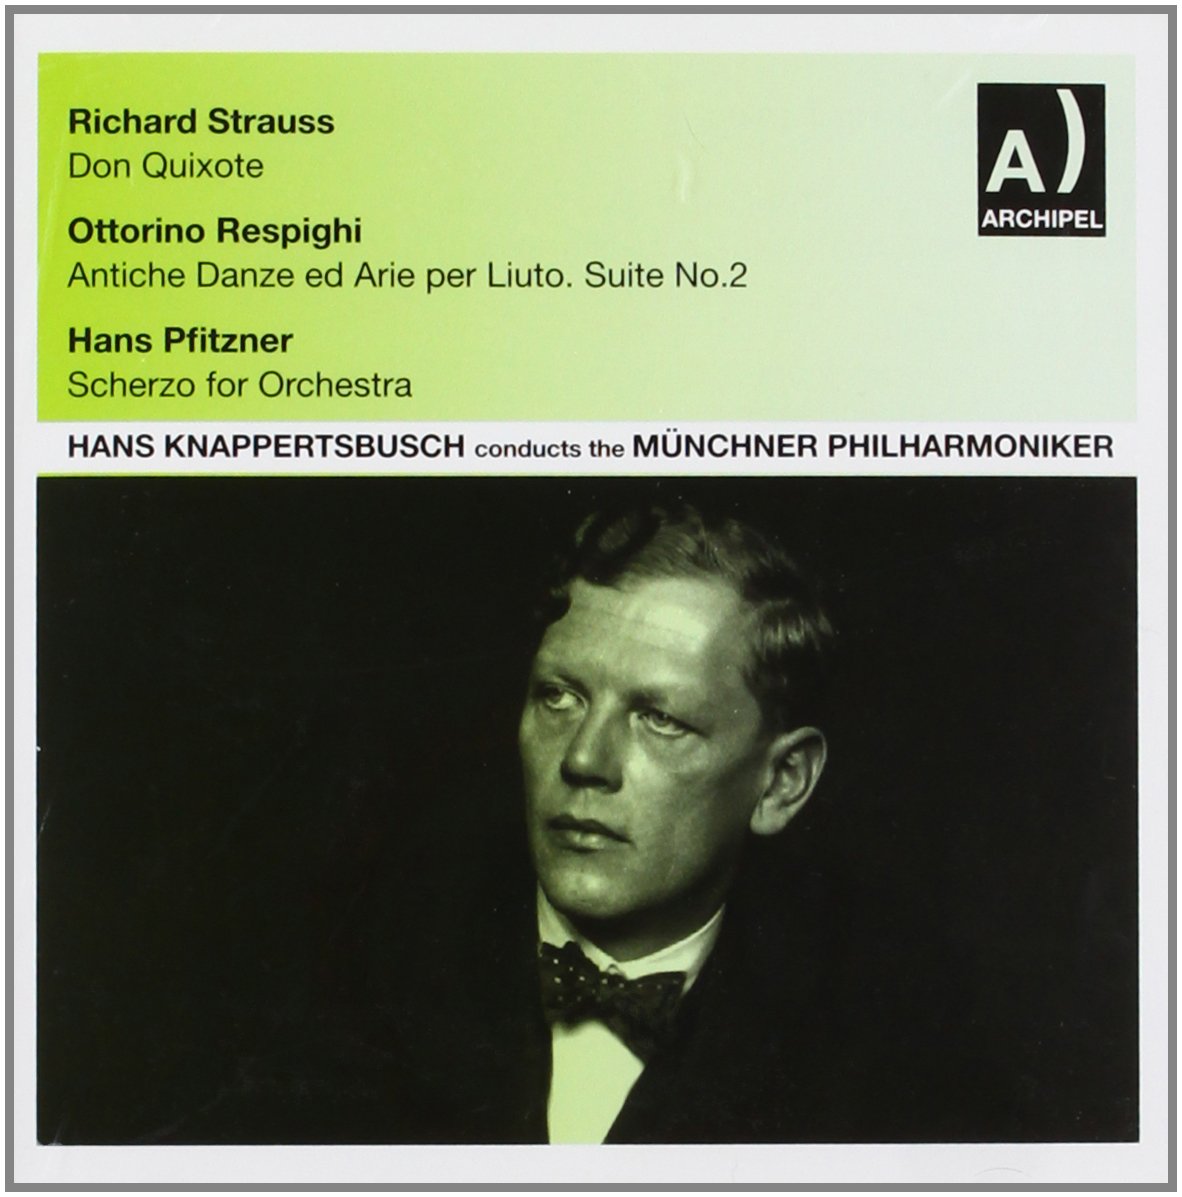 Kappertsbusch conducts Munich Philharmoniker | Munich Philharmonic Orchestra, Hans Knappertsbusch, Hans Pfitzner, Richard Strauss, Ottorino Respighi